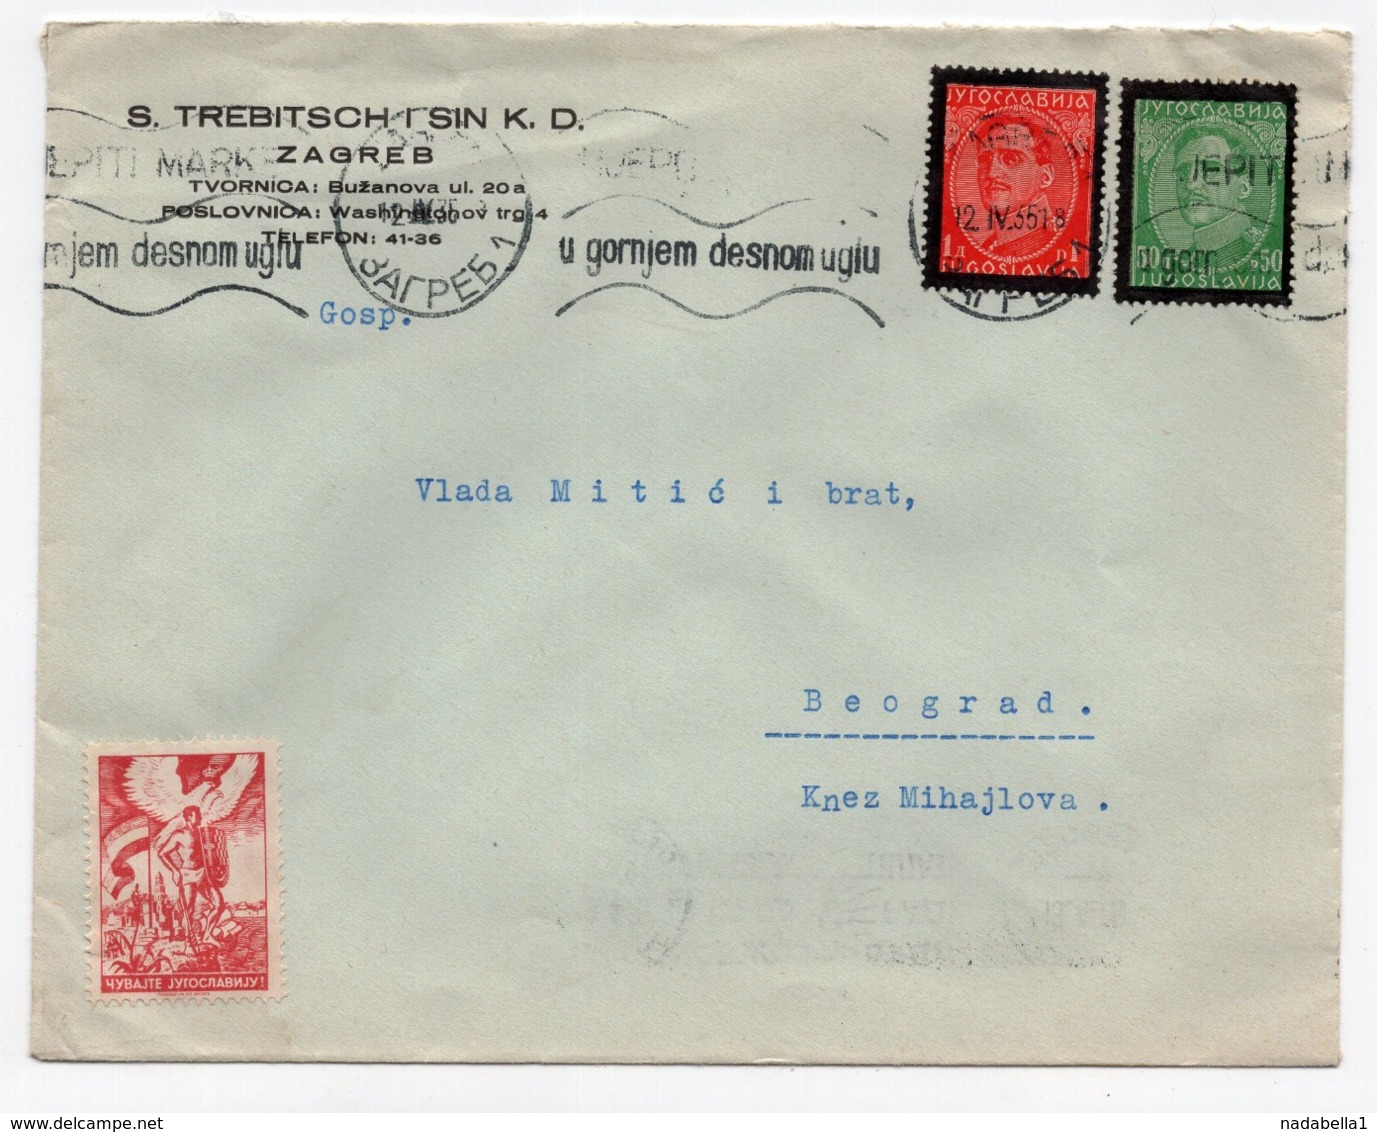 1935 YUGOSLAVIA, CROATIA, ZAGREB TO BELGRADE, S. TREBITSCH I SIN K.D., FLAM - Covers & Documents